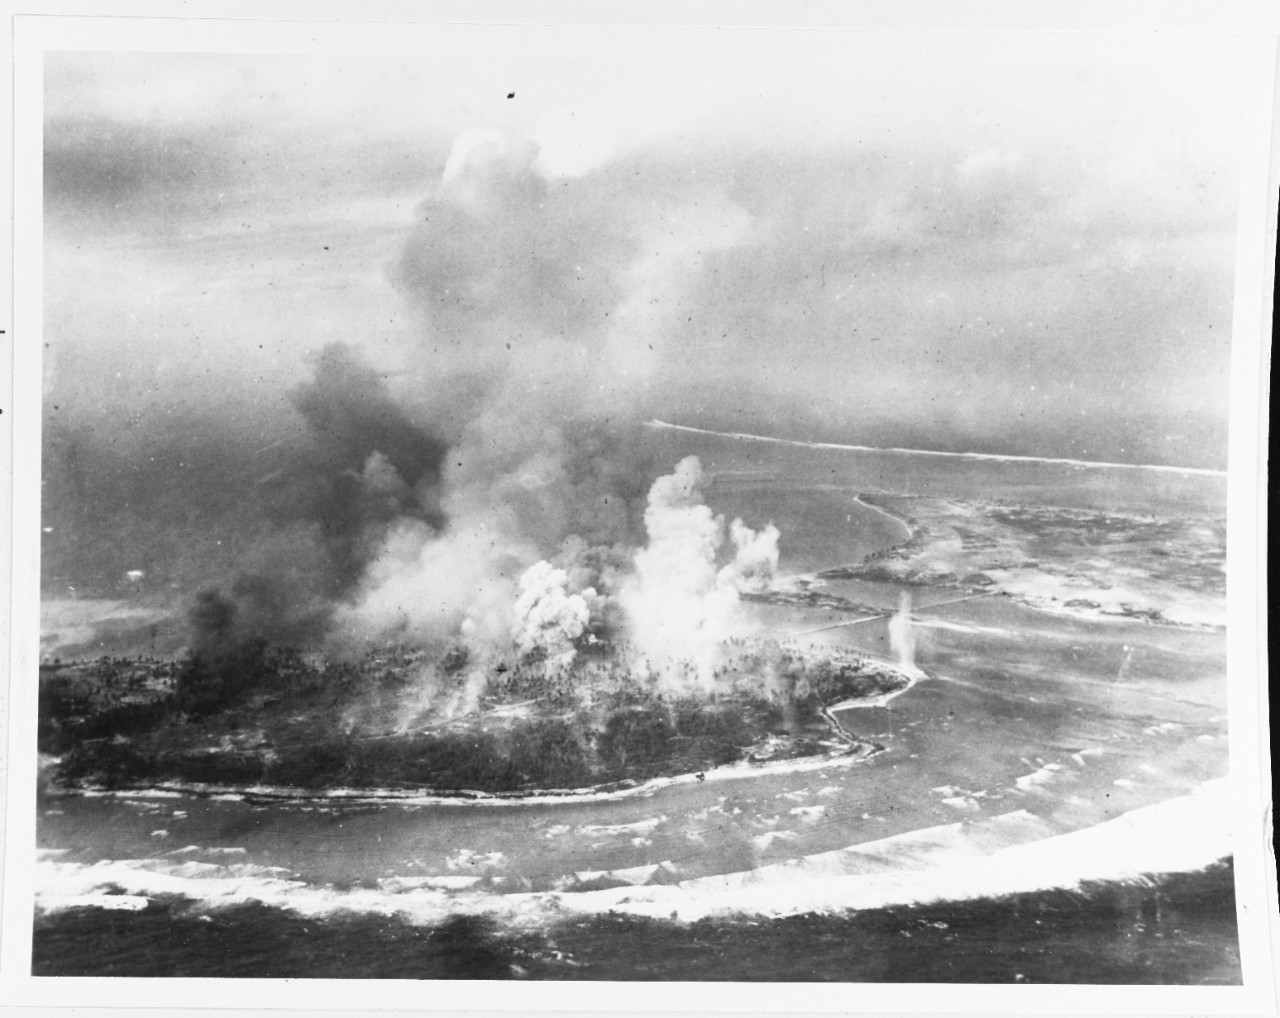 Kwajalein Invasion, February 1944